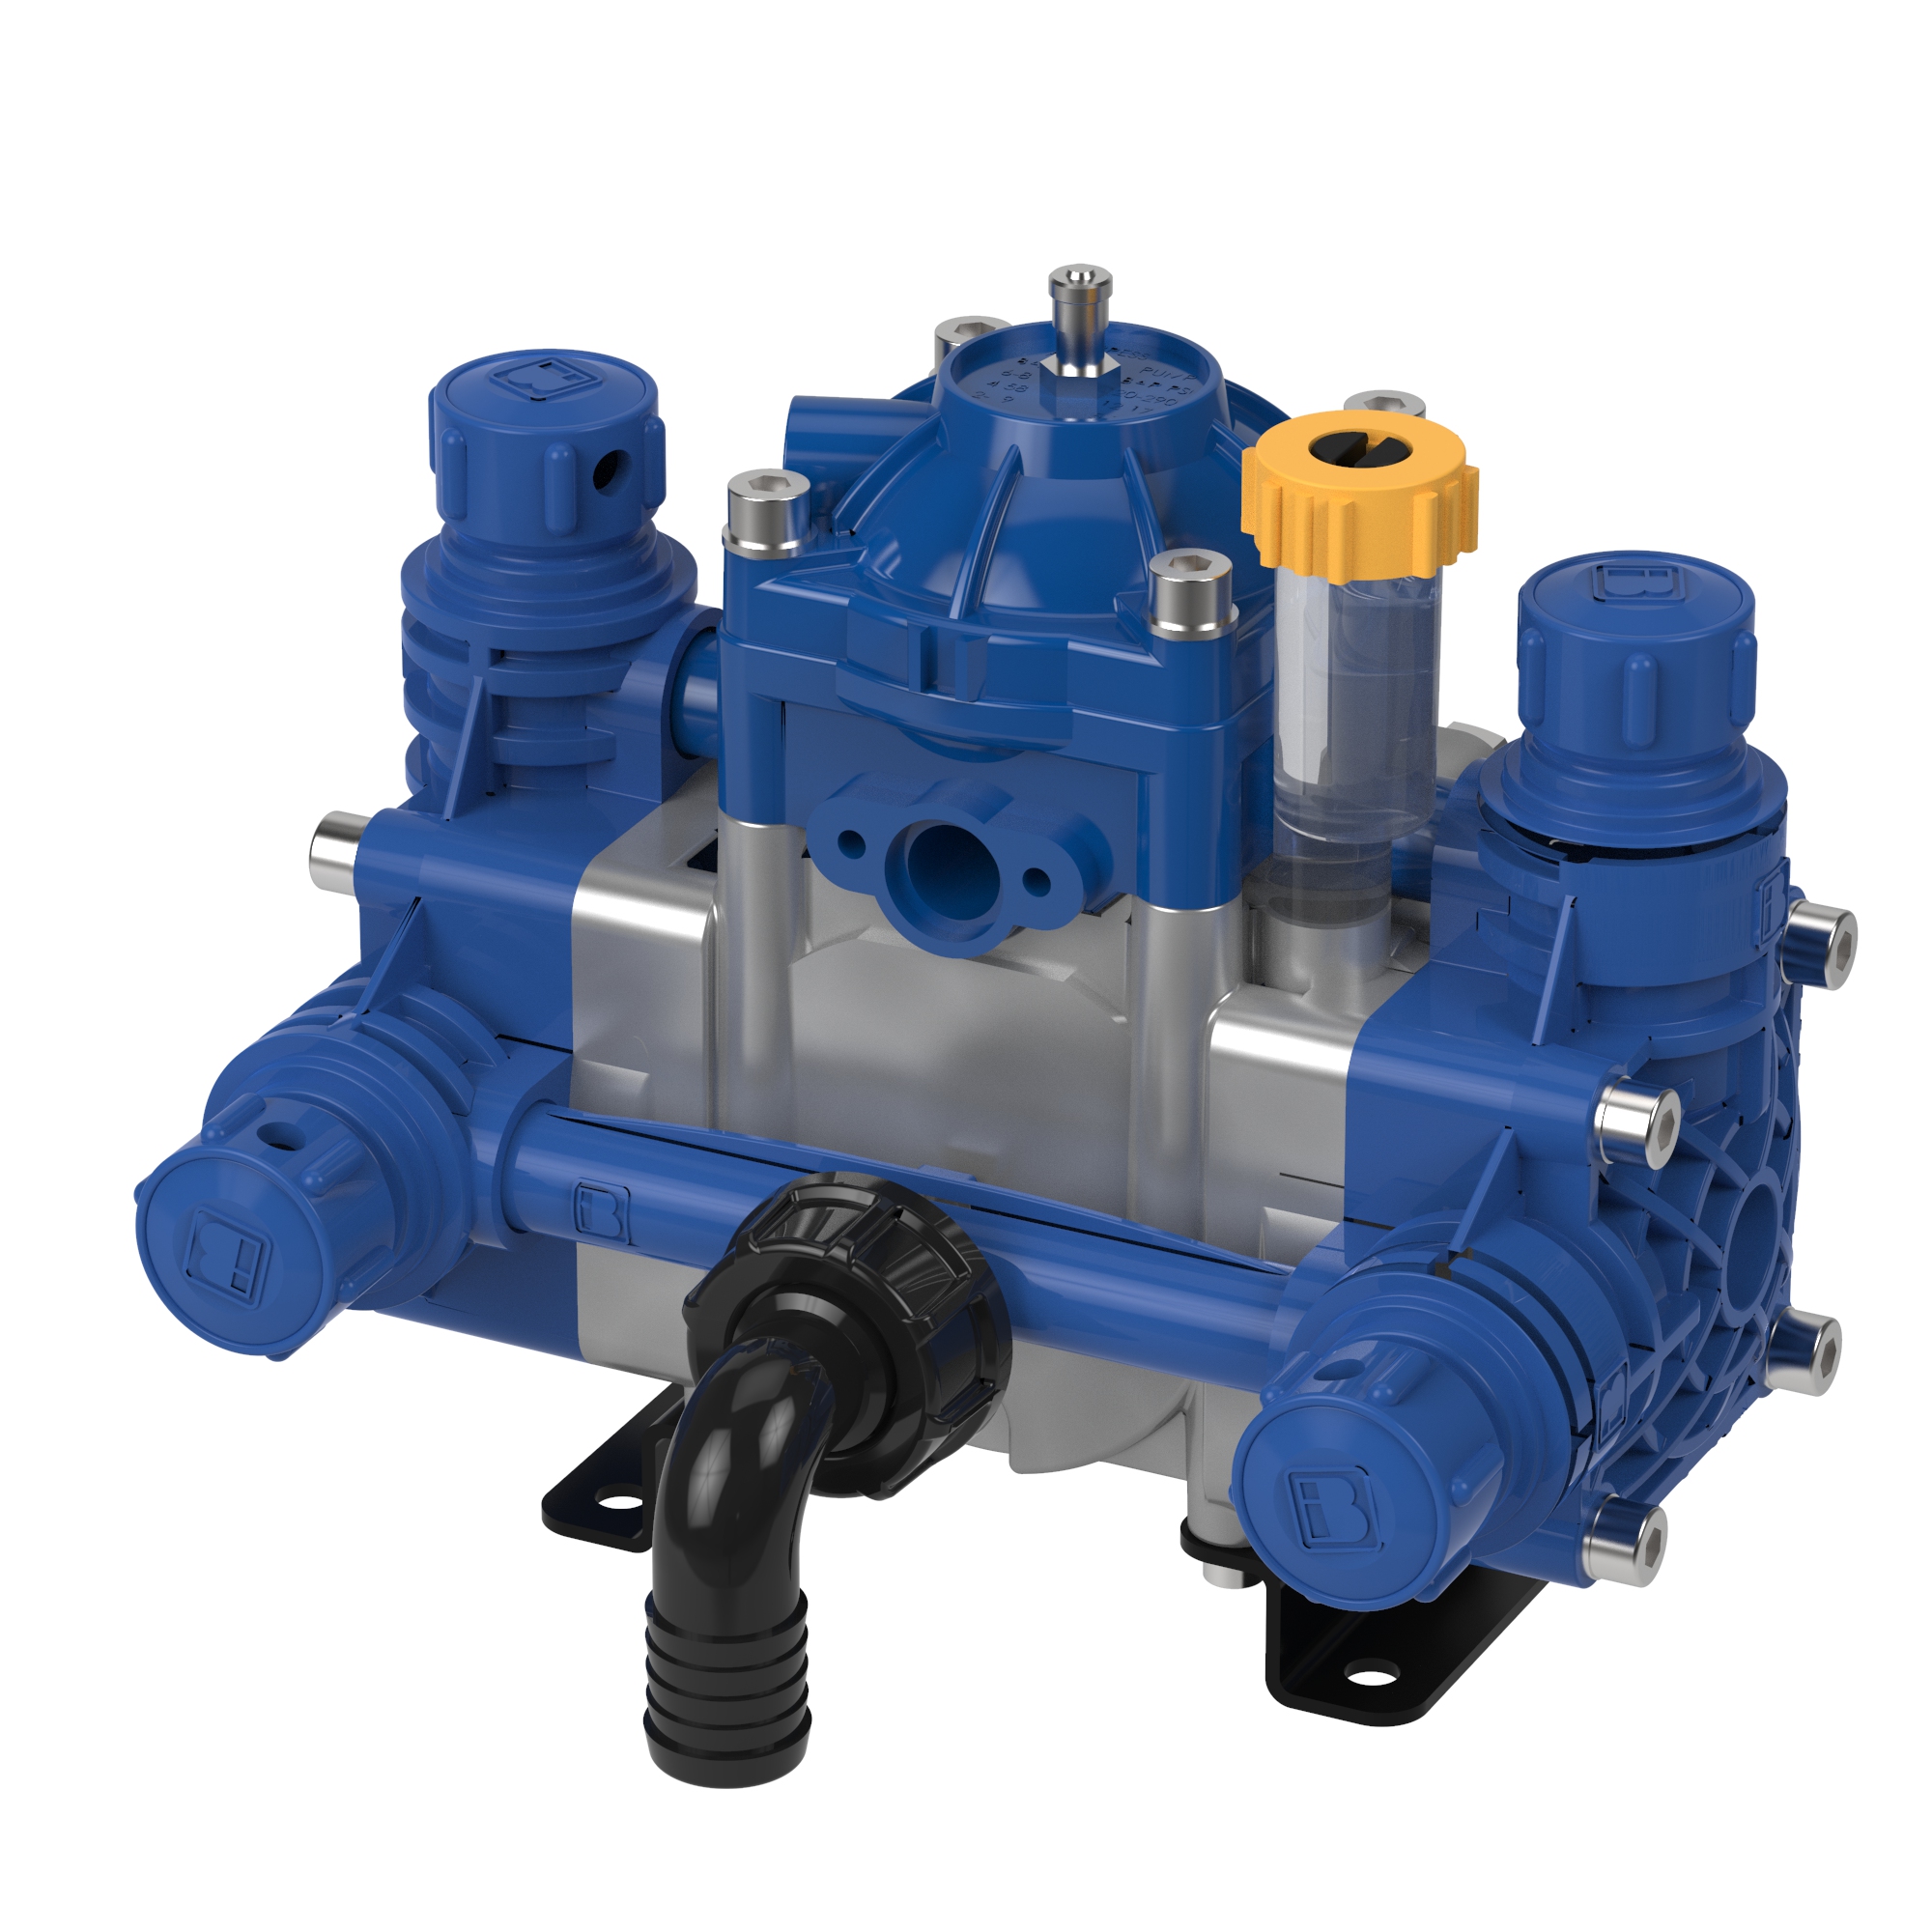 Pentair Hypro 9915系列中压隔膜泵”>
                <div class=